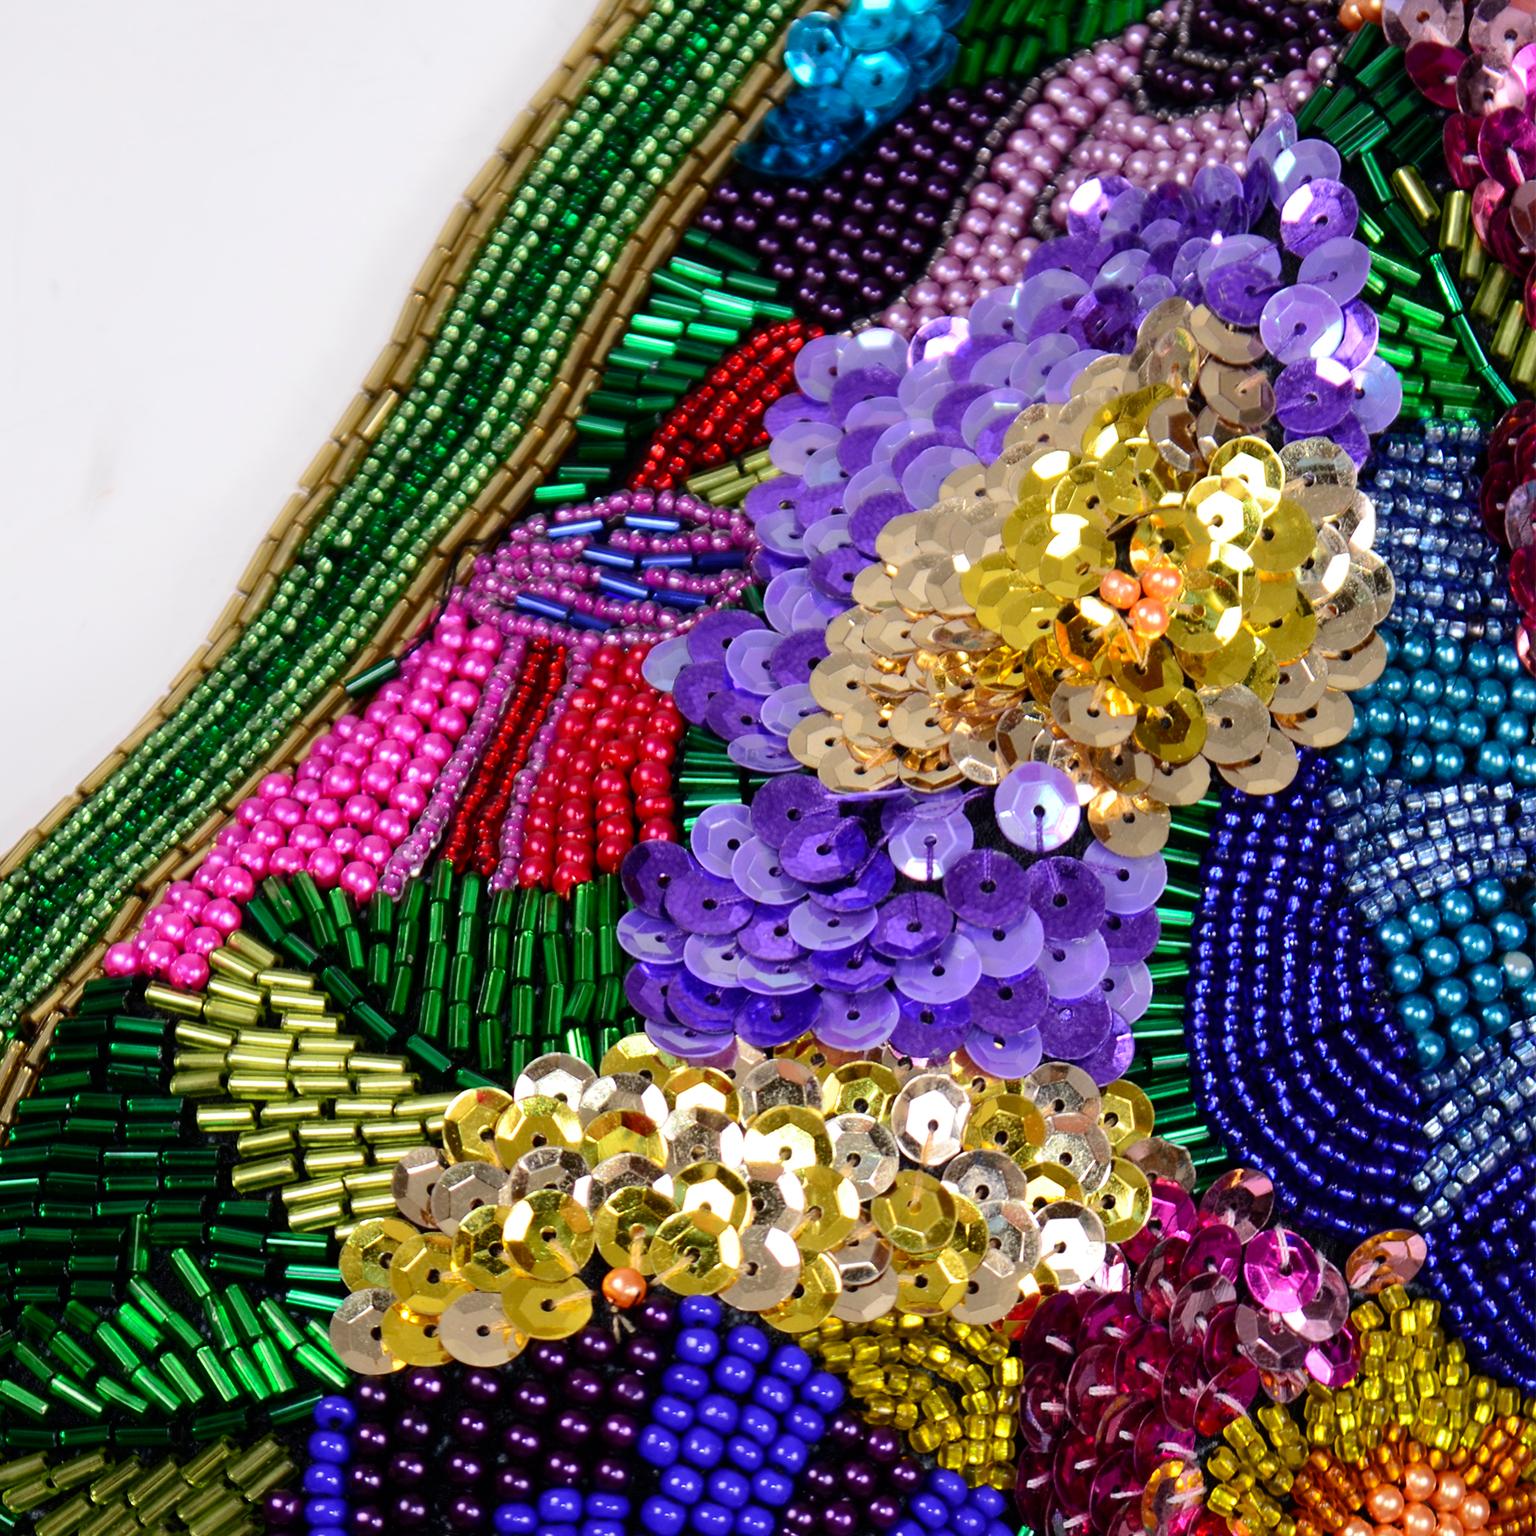 Women's Diane Freis Vintage Heavily Beaded Colorful Floral Cropped Evening Bolero Jacket